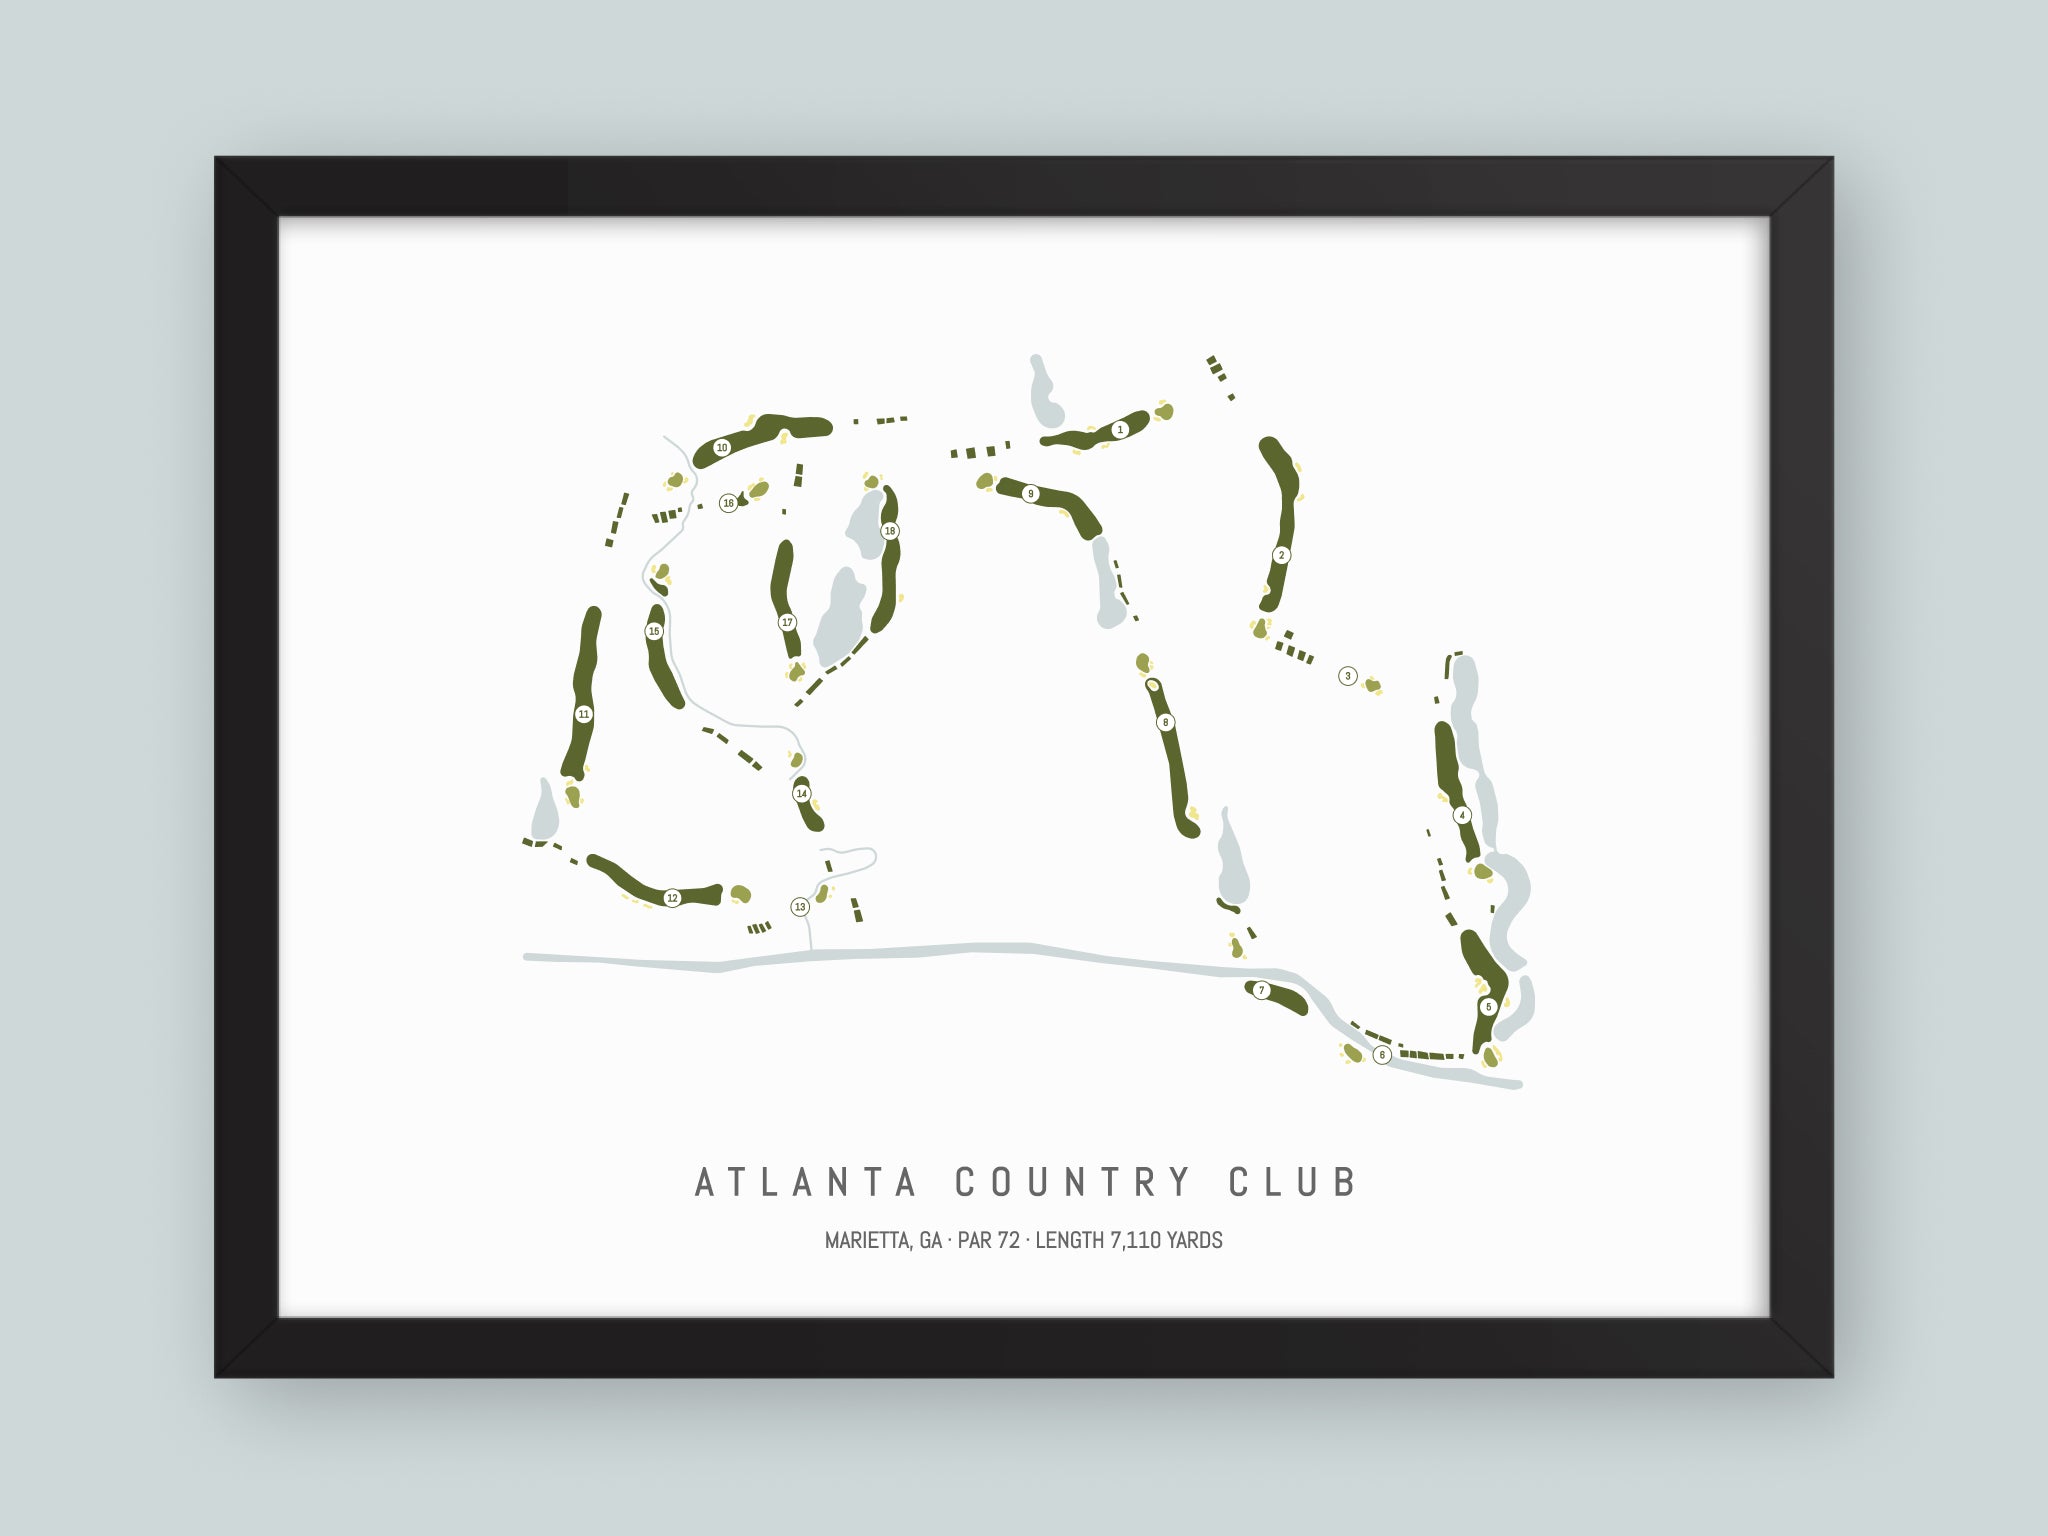 Atlanta-Country-Club-GA--Black-Frame-24x18-With-Hole-Numbers